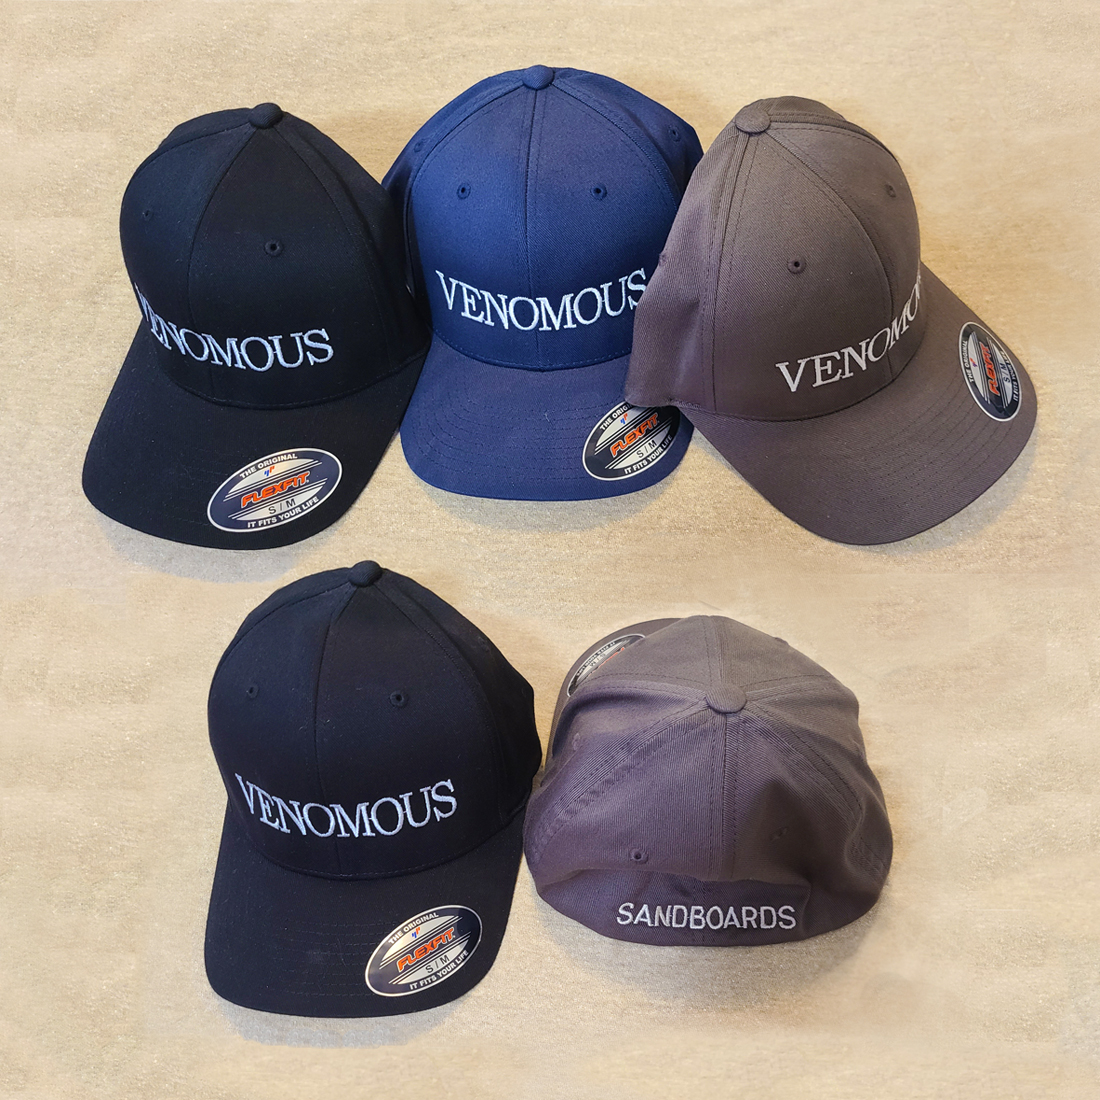 Venomous brand fitted caps